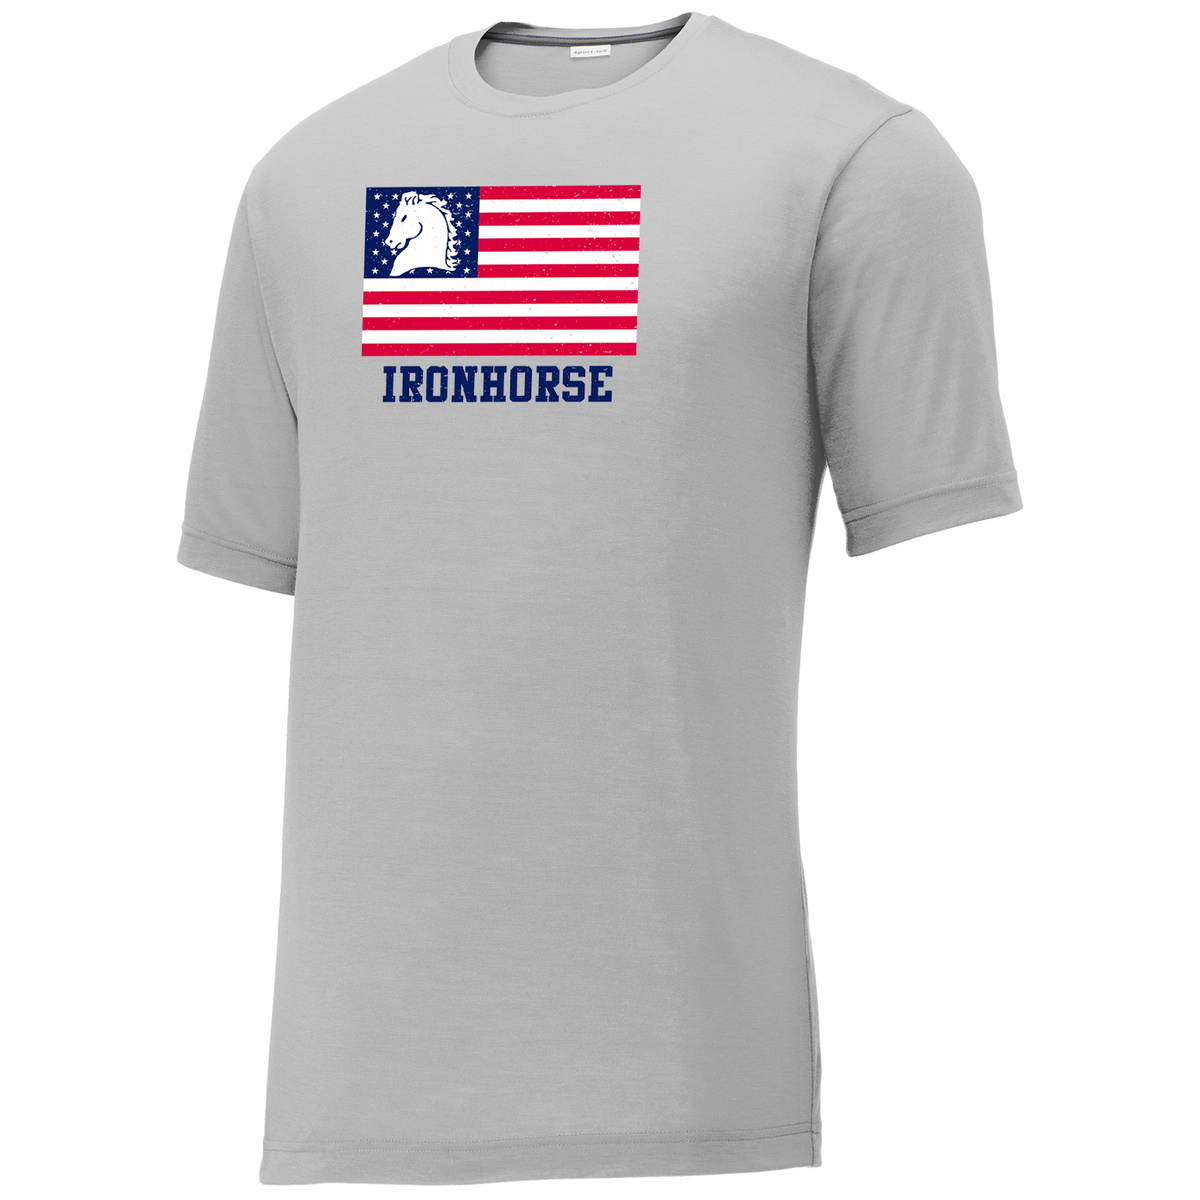 Ironhorse ROTC CottonTouch Performance T-Shirt